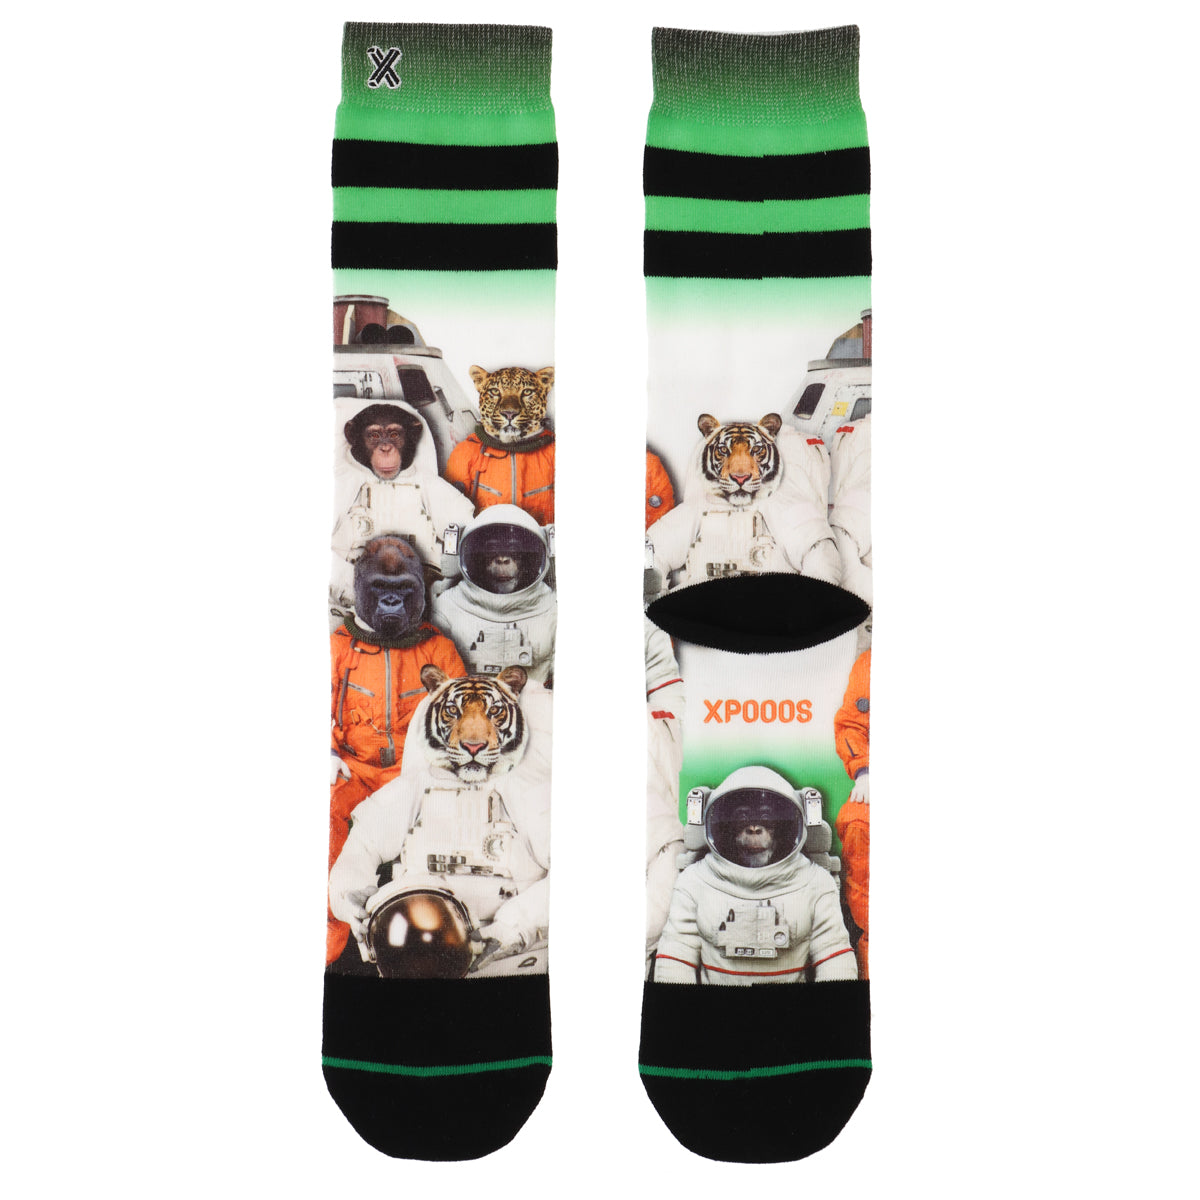 Astronaut team men's socks